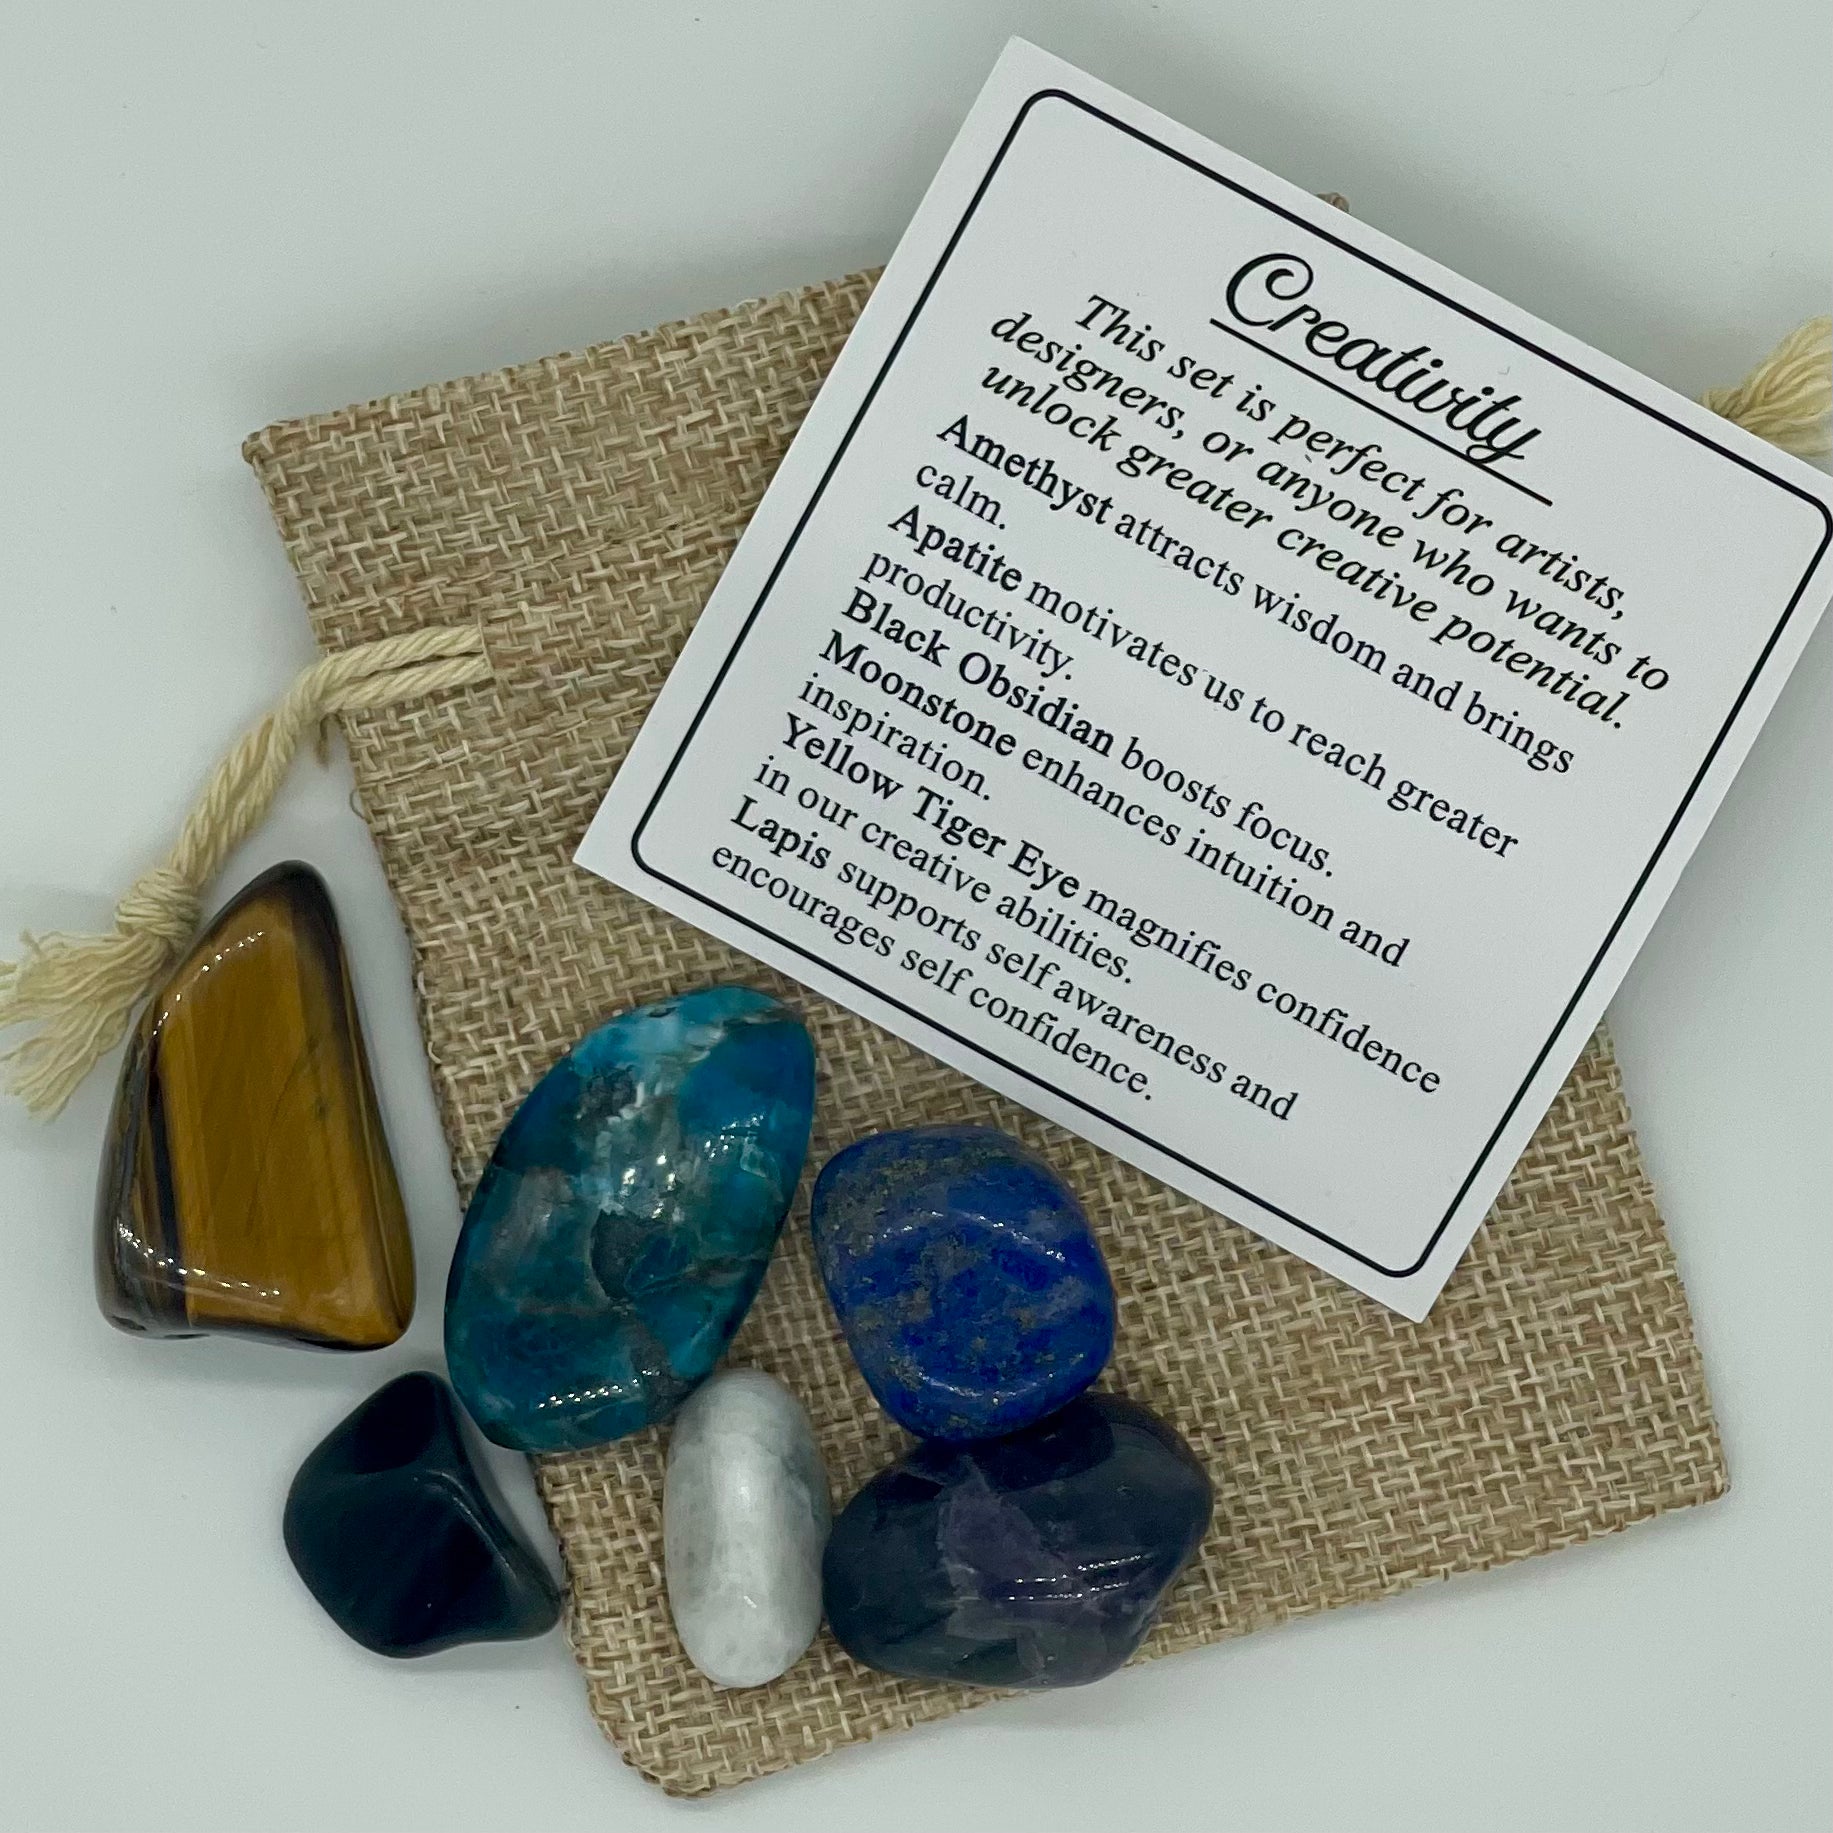 6 Assorted Tumbled Gemstones for Creativity in Jute Bag